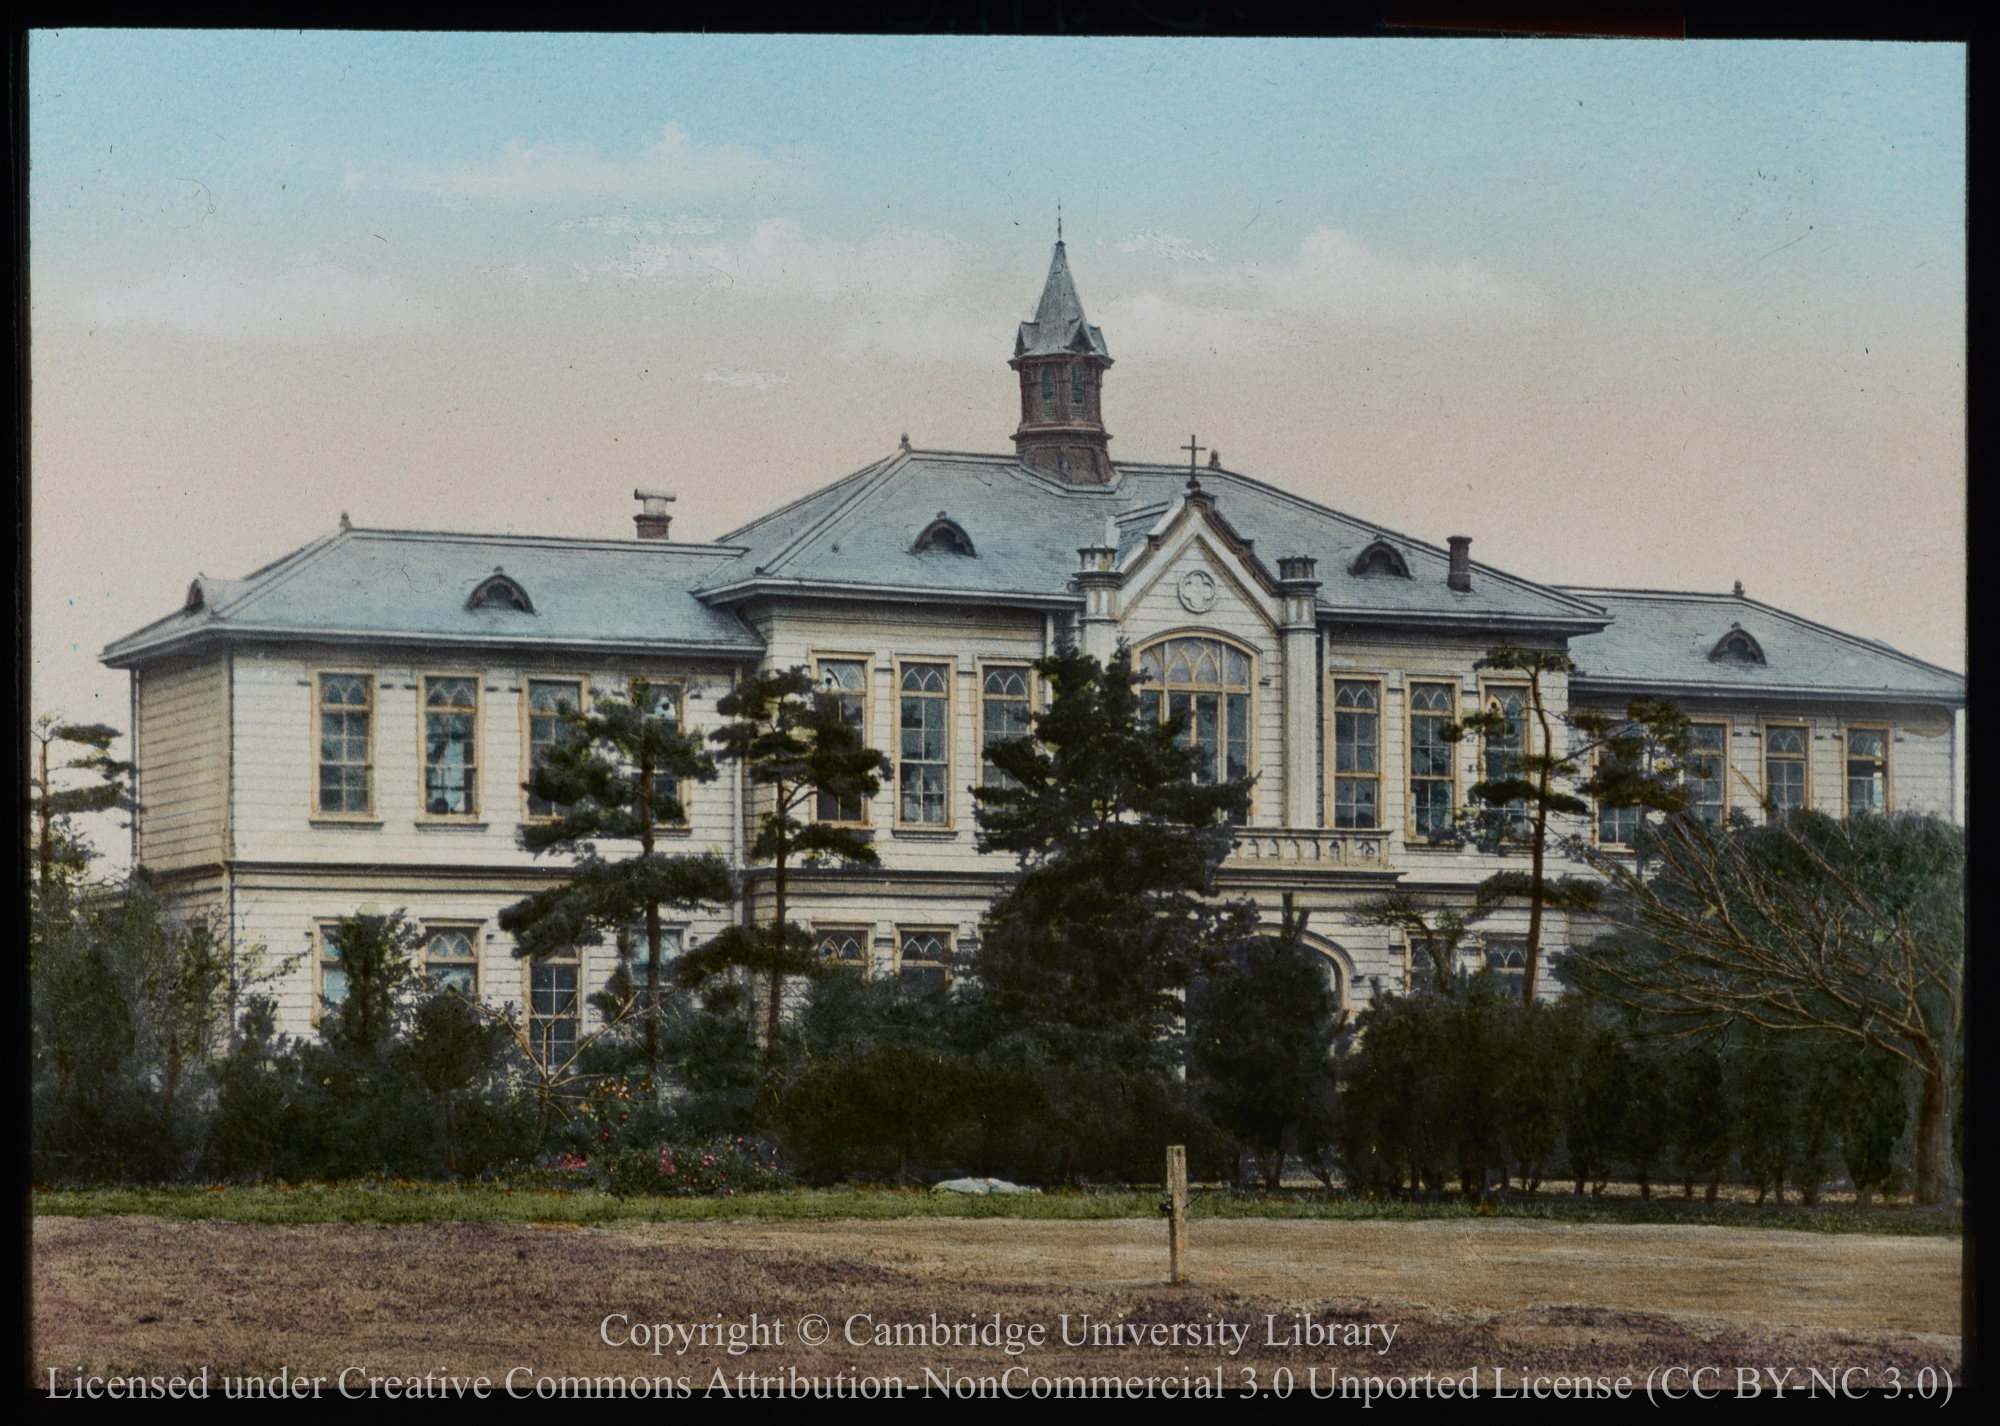 Central Theological College, Ikebukuru, Tokyo, 1900 - 1930